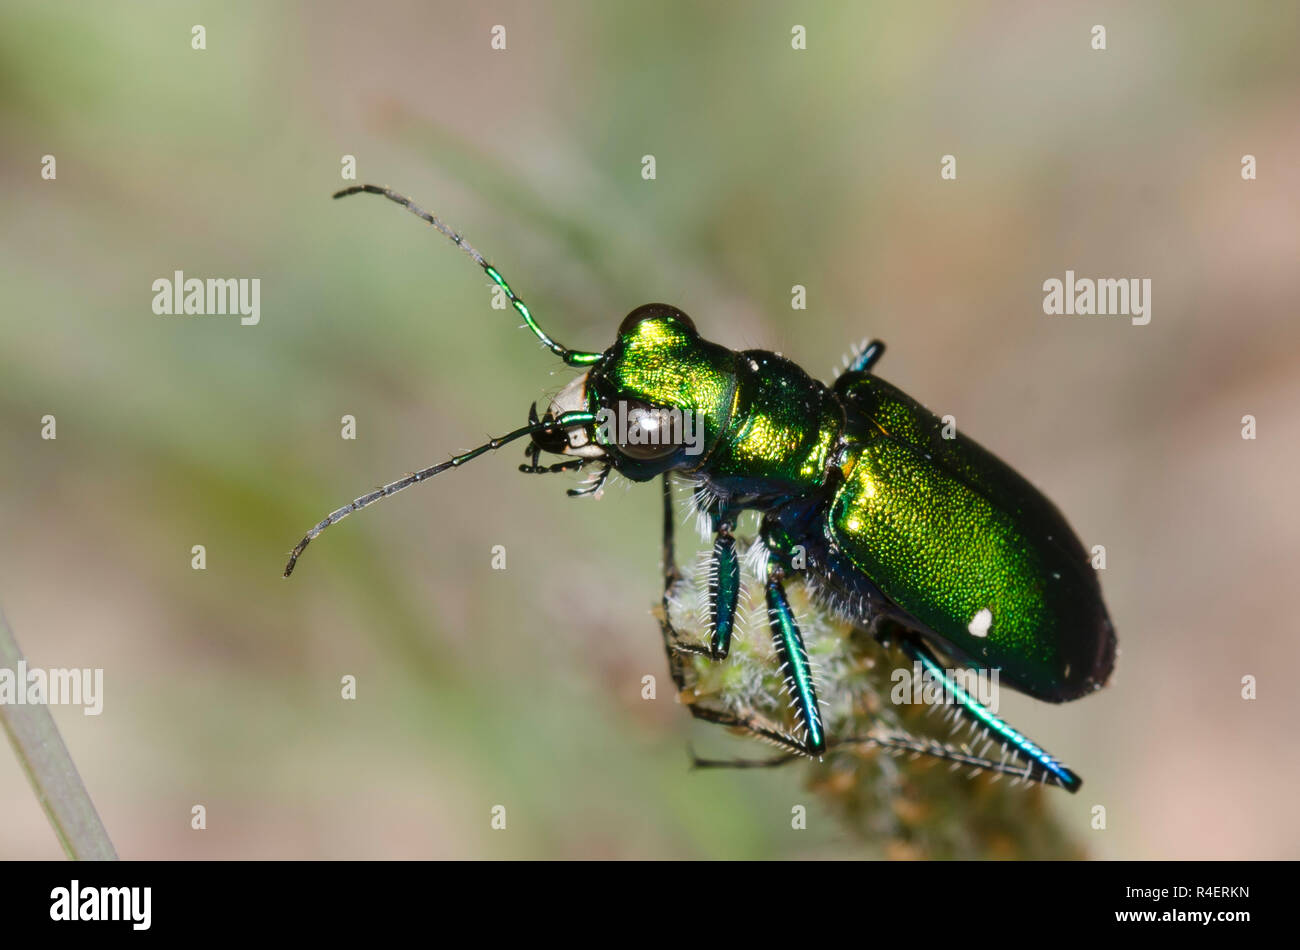 Six-Spotted Cicindela sexguttata Tiger Beetle, Banque D'Images